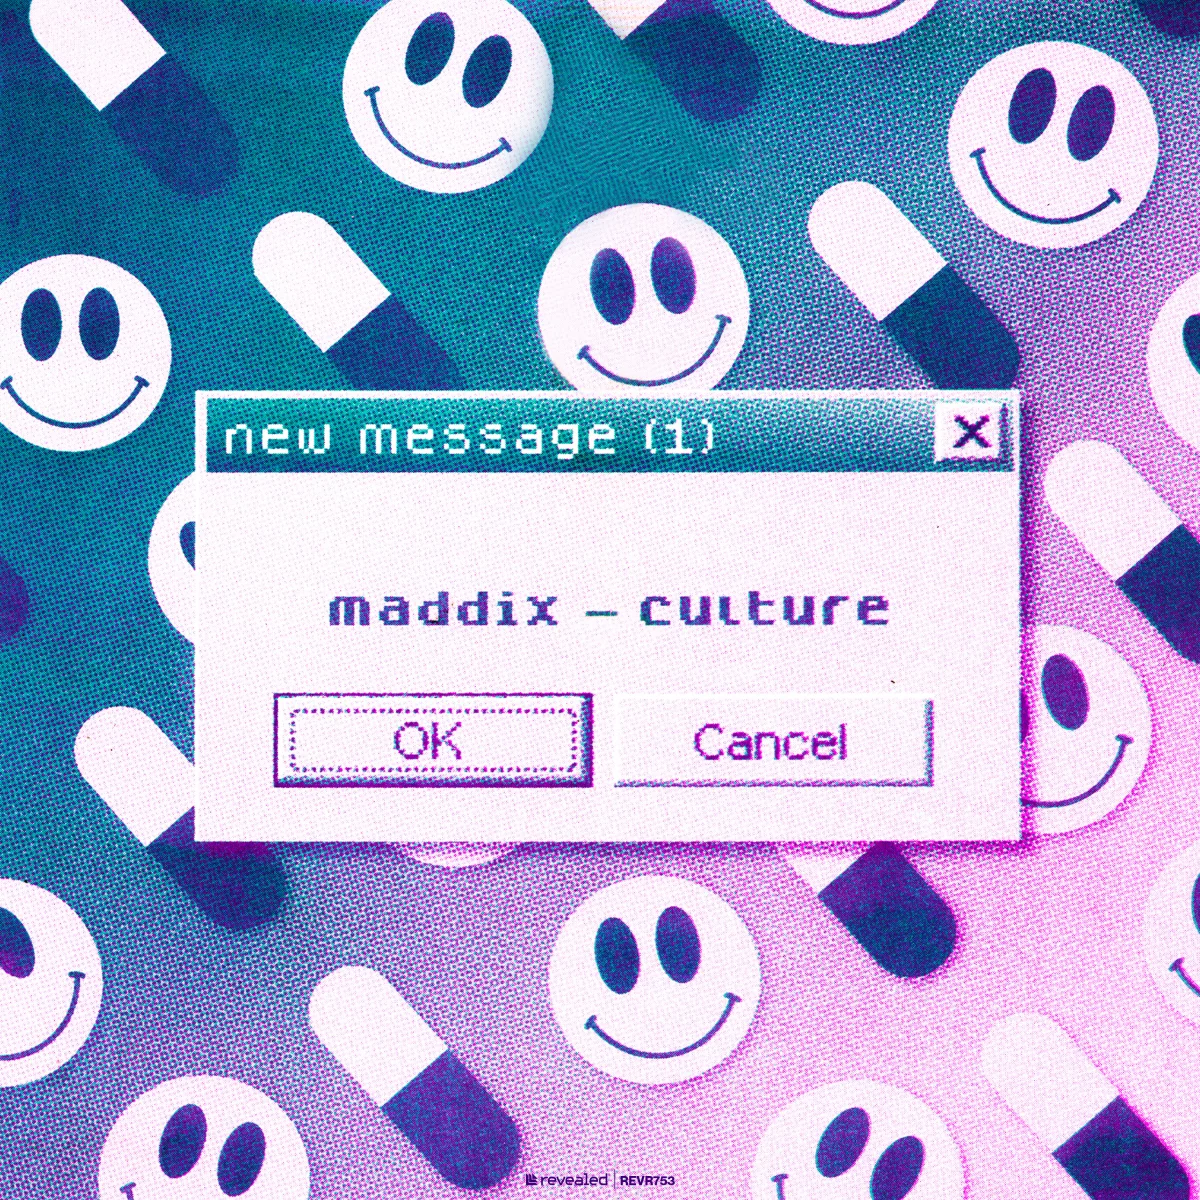 Culture - Maddix⁠ 